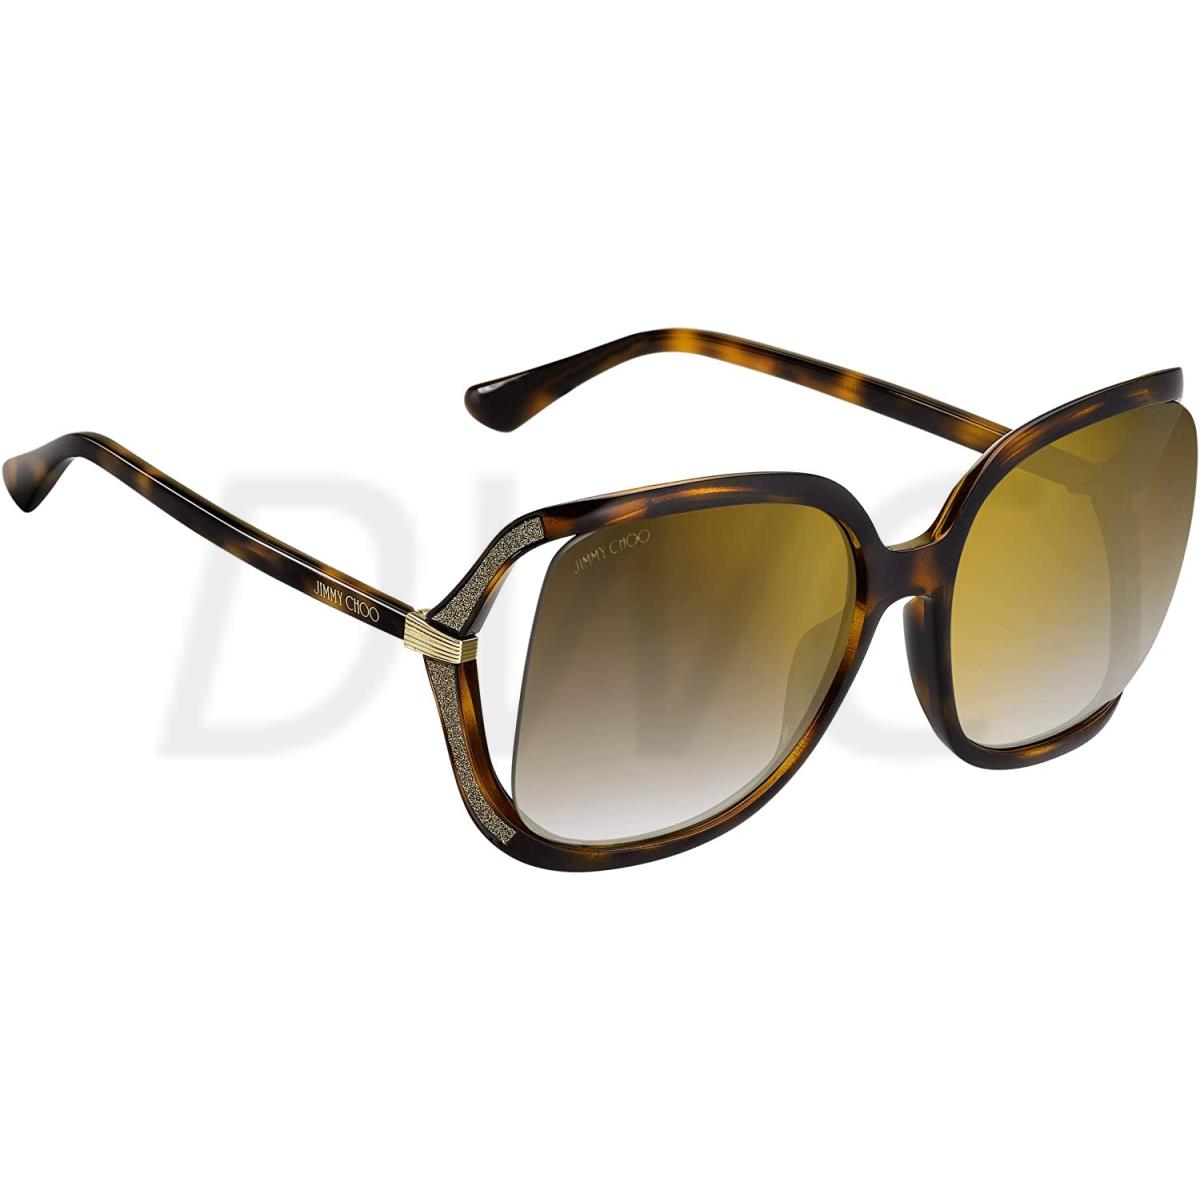 Jimmy Choo sunglasses JCHTilda - Dark Havana Frame, Brown Ss Gold Lens 1